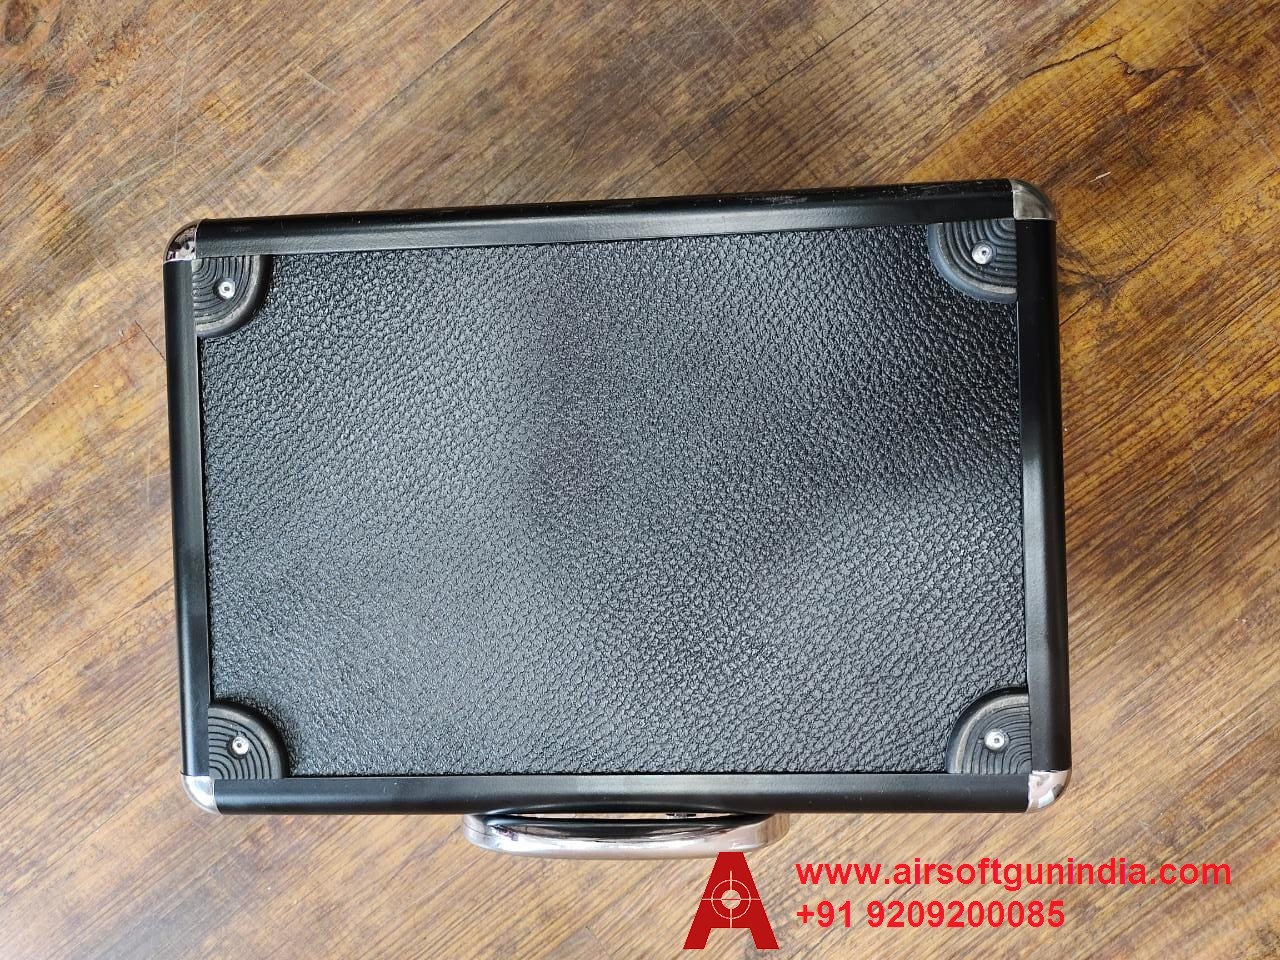 Premium Aluminum Case / Box Black With Safety Lock By Airsoft Gun India